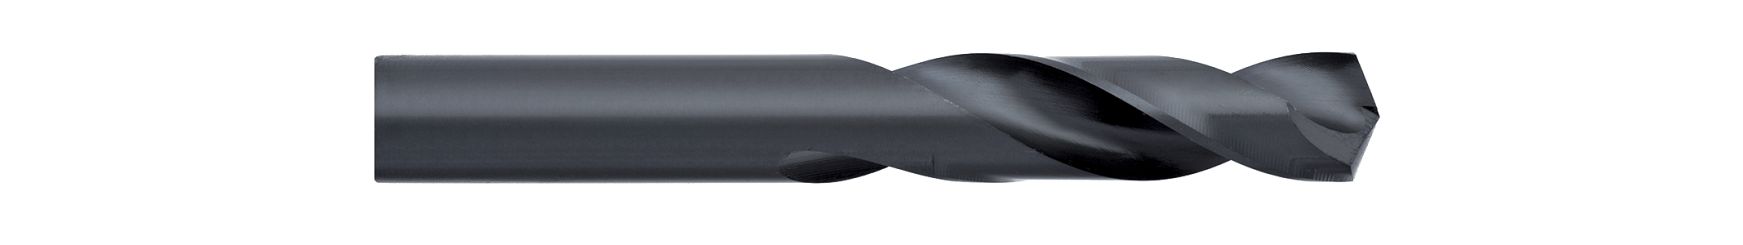 Drills-High Speed Steel-Stub Length-135° Split Point